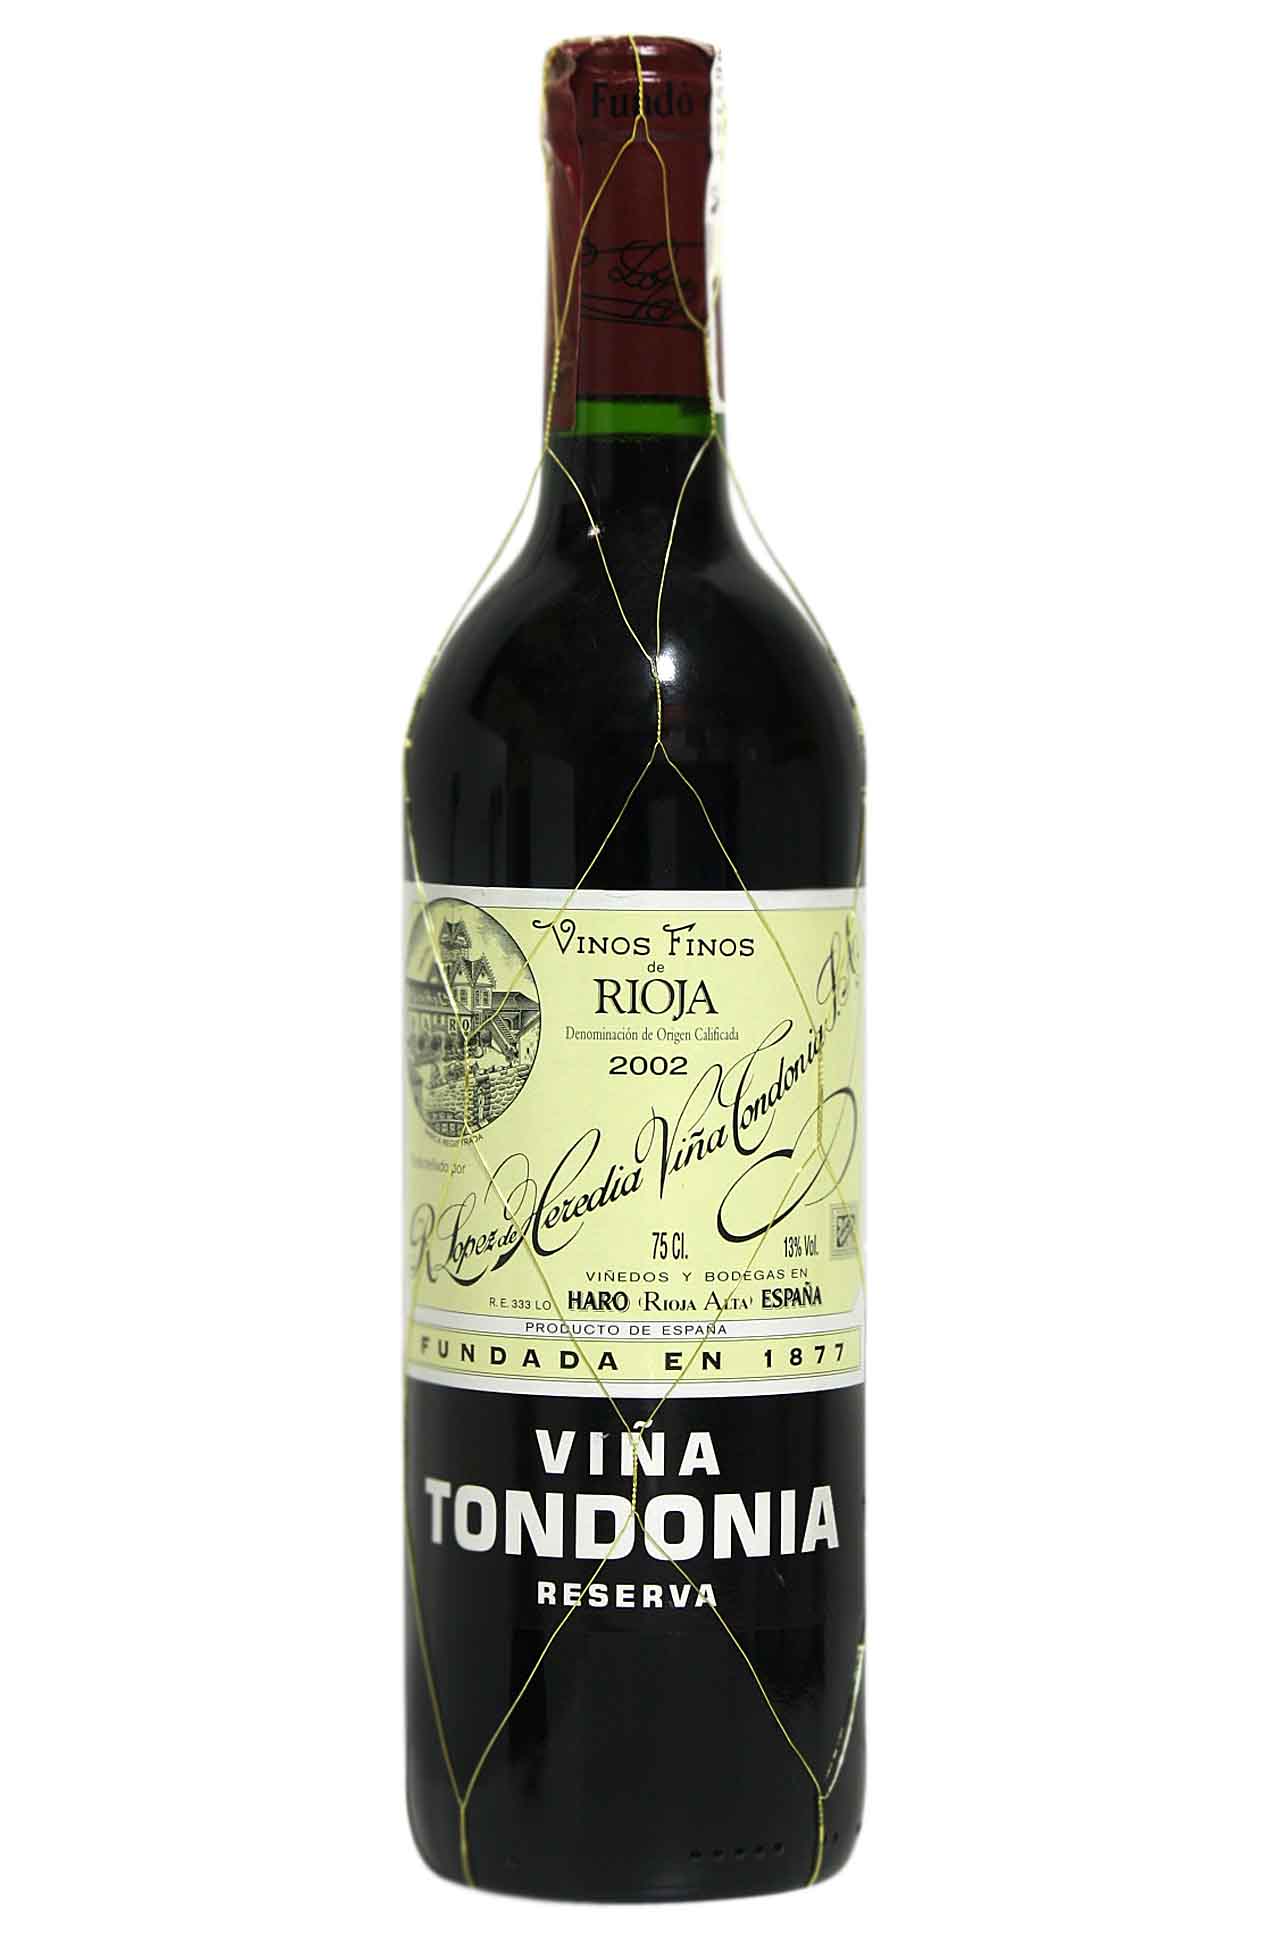 Aged red wine Viña Tondonia